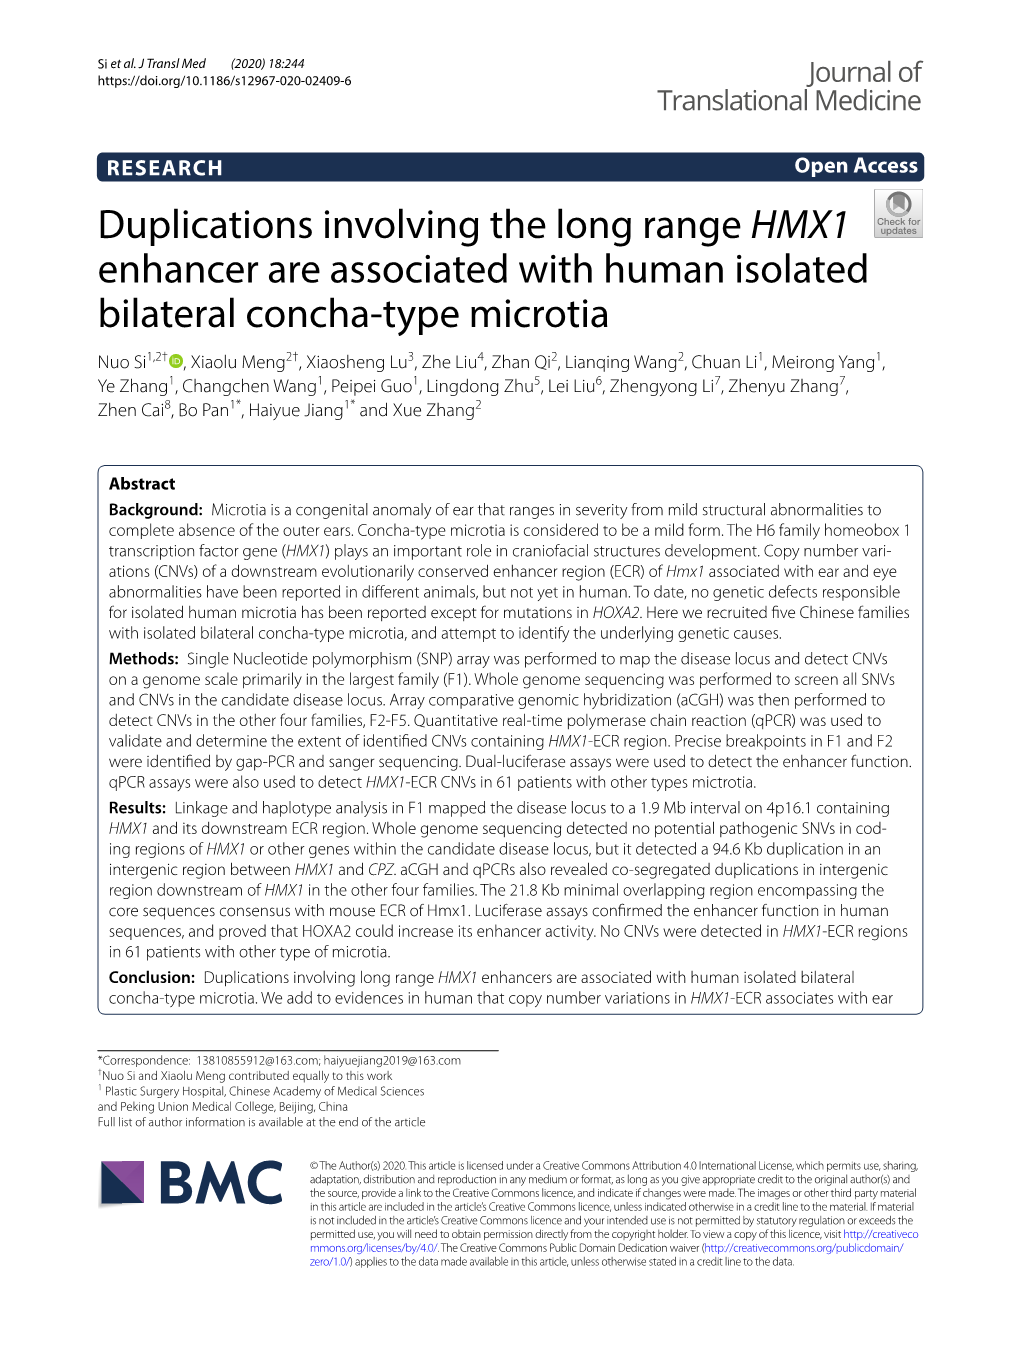 Duplications Involving the Long Range HMX1 Enhancer Are Associated